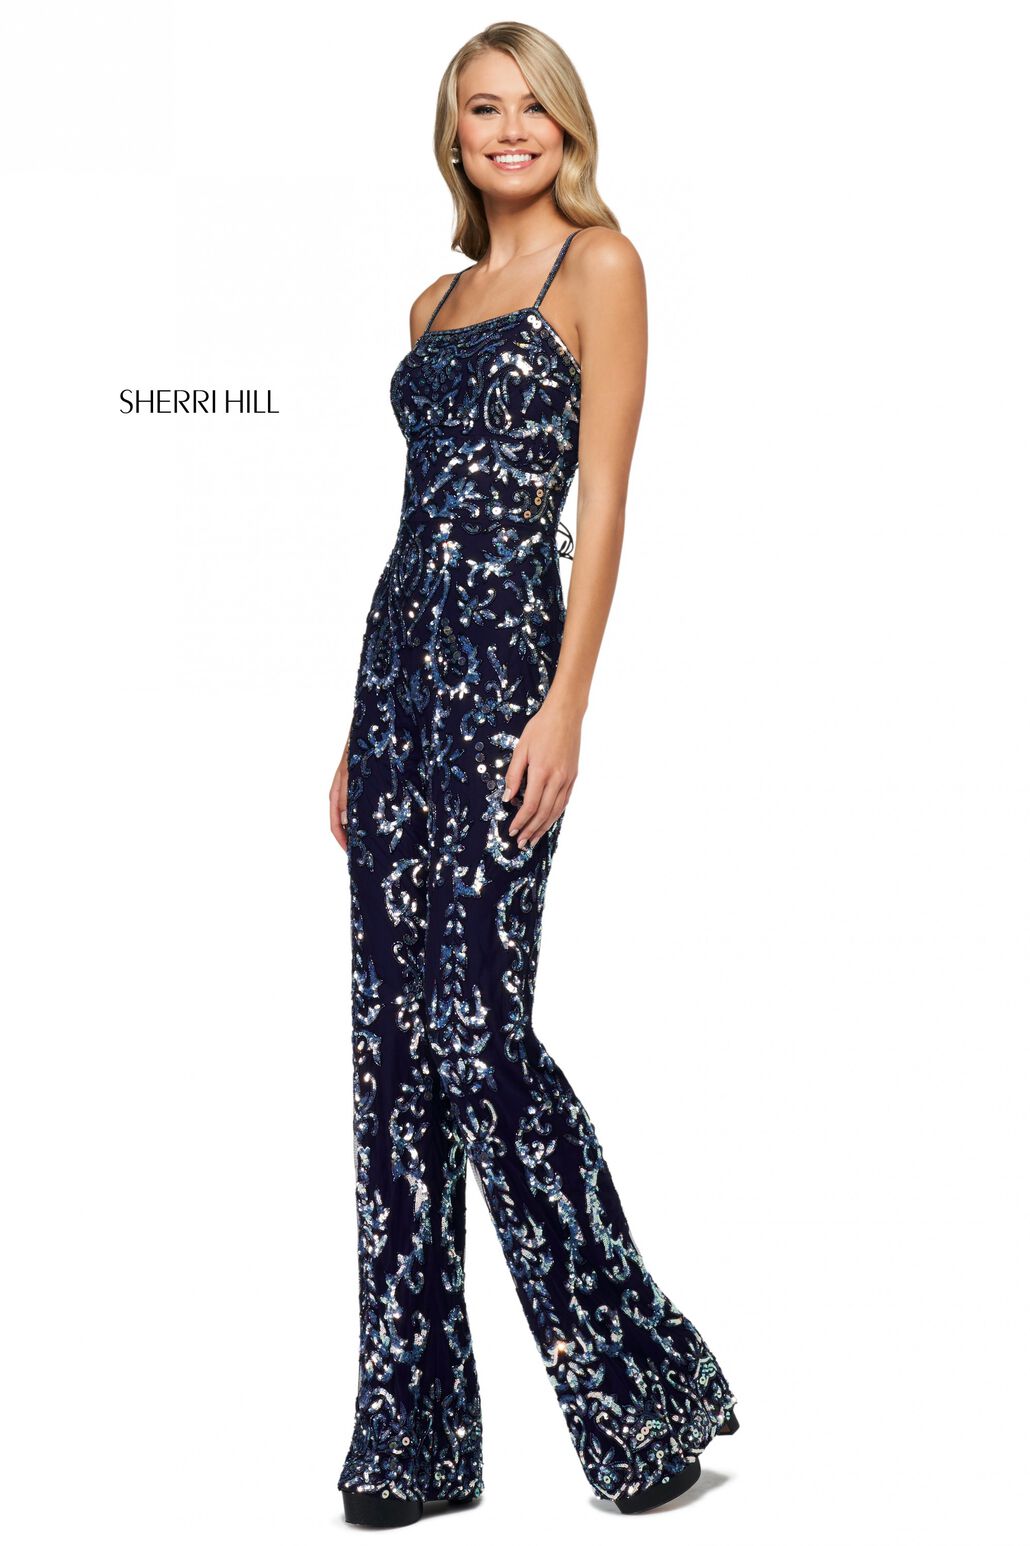 Sherri Hill 54055 navy light blue prom dresses image.